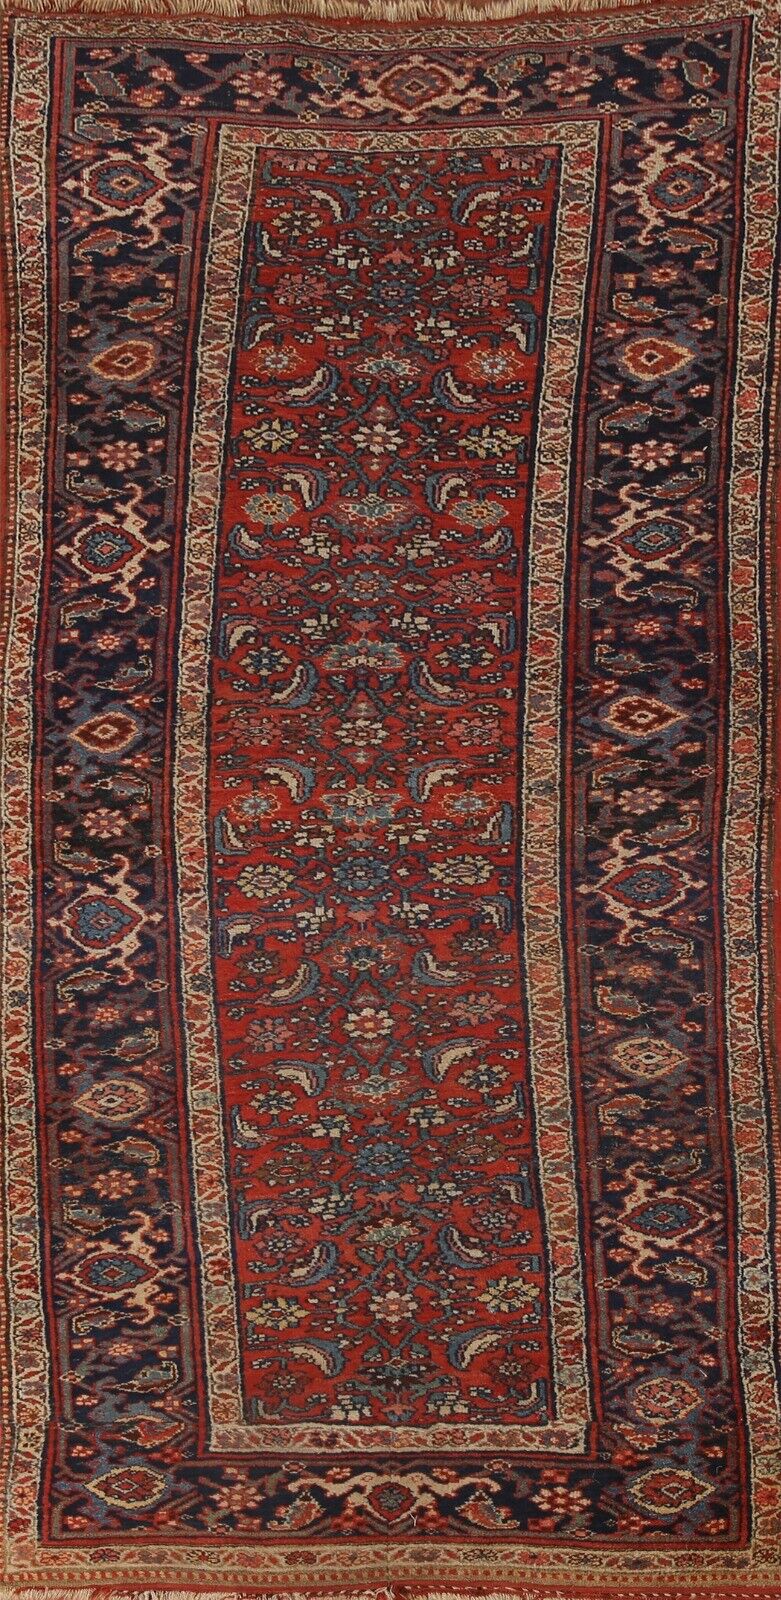 Antique Floral Bidjar Traditional Hallway Rug 4'x9' Wool Hand-knotted Runner Rug